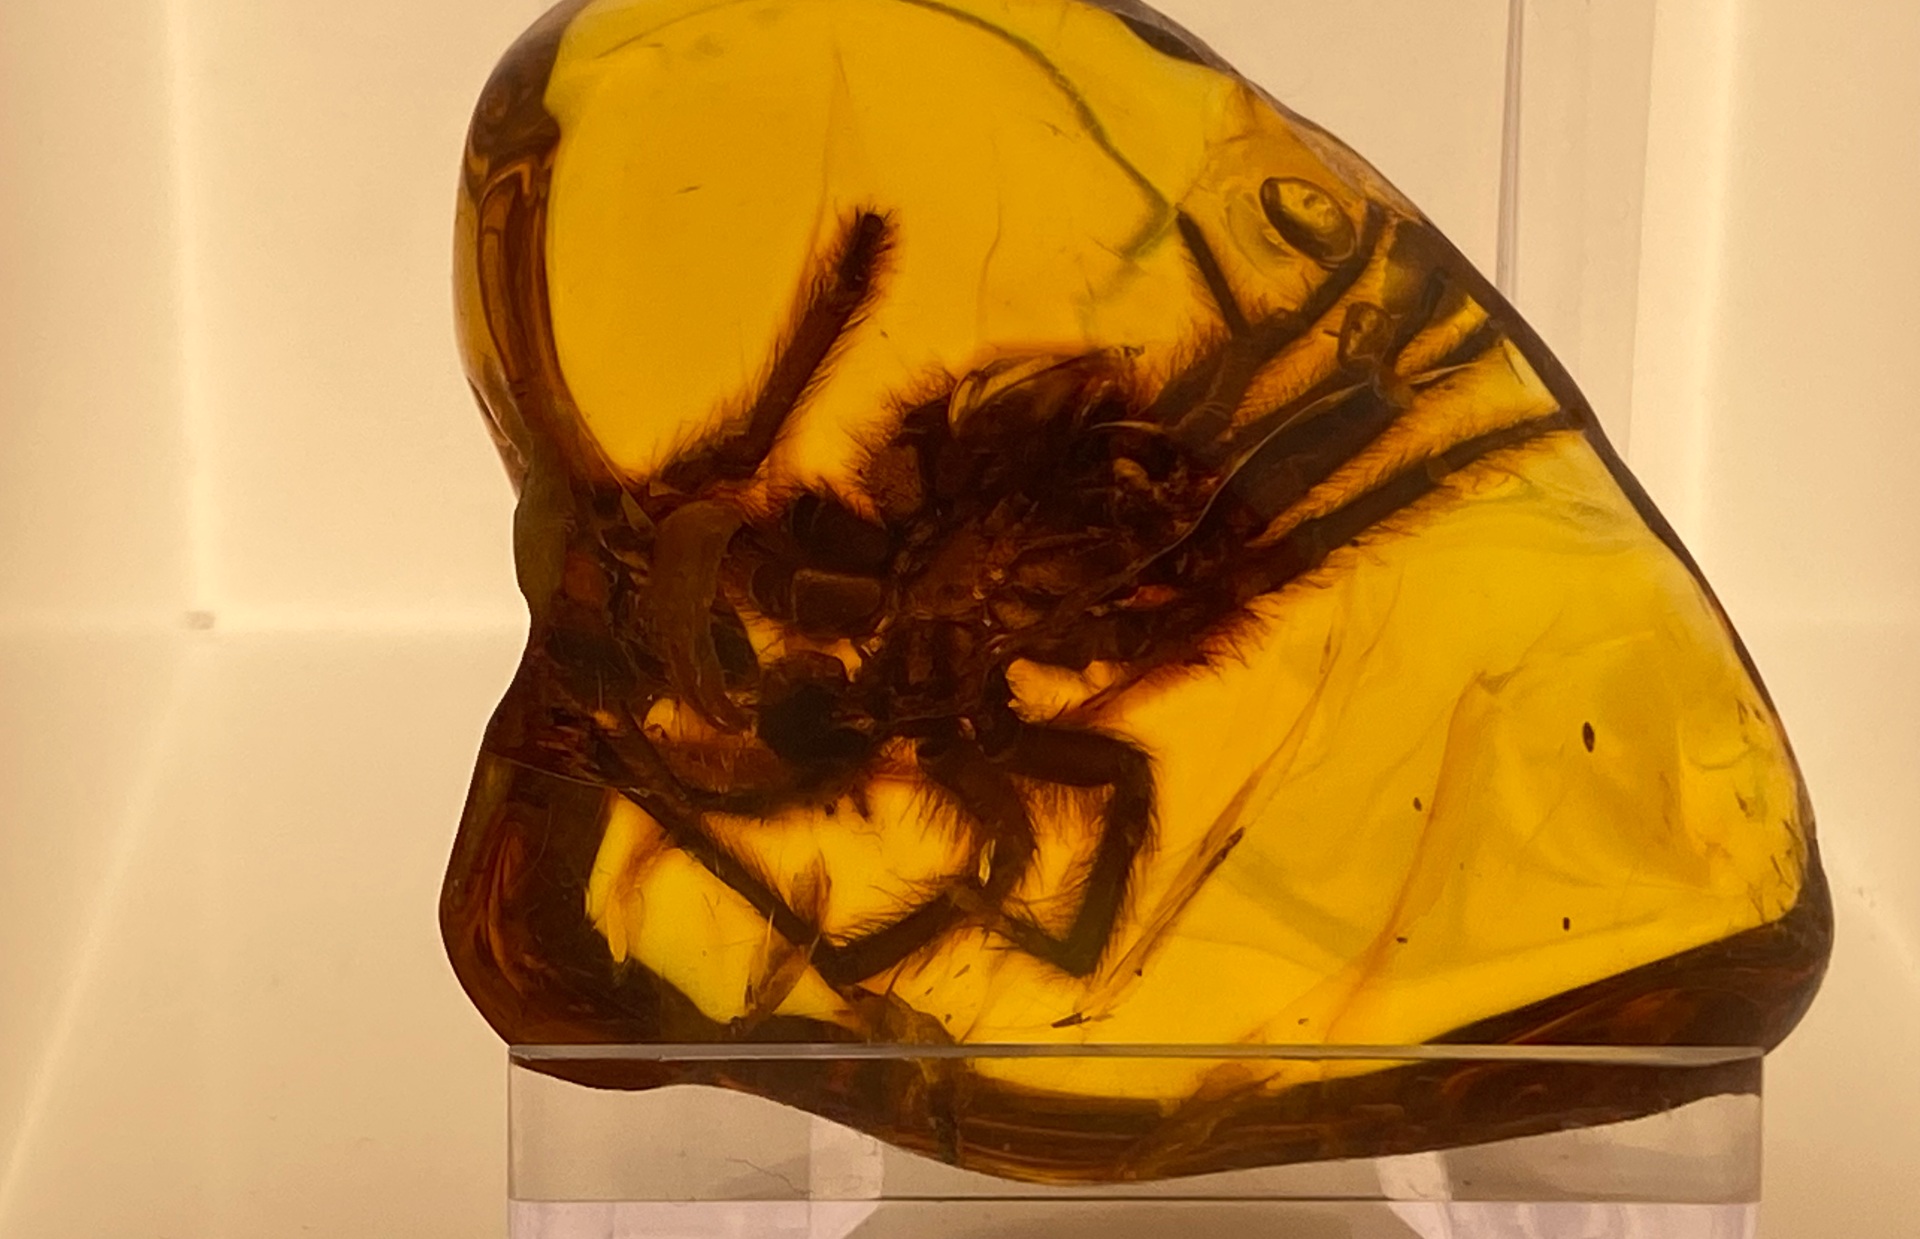 Bird-eating spider preserved in amber (Image: Tamara Hinson)